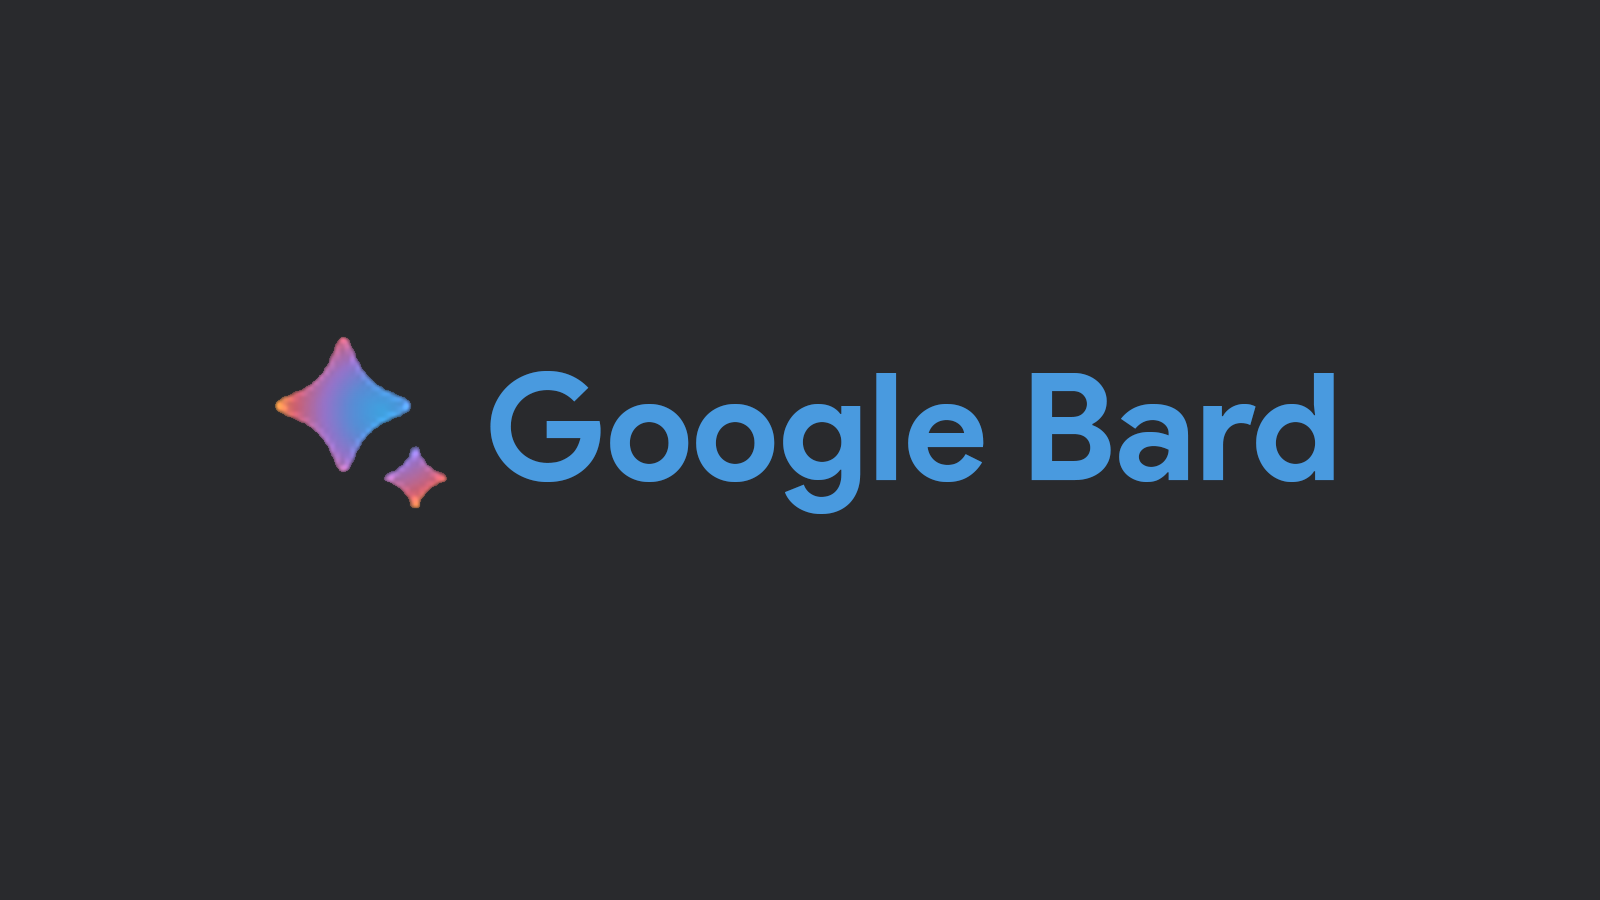 Google Bard Image